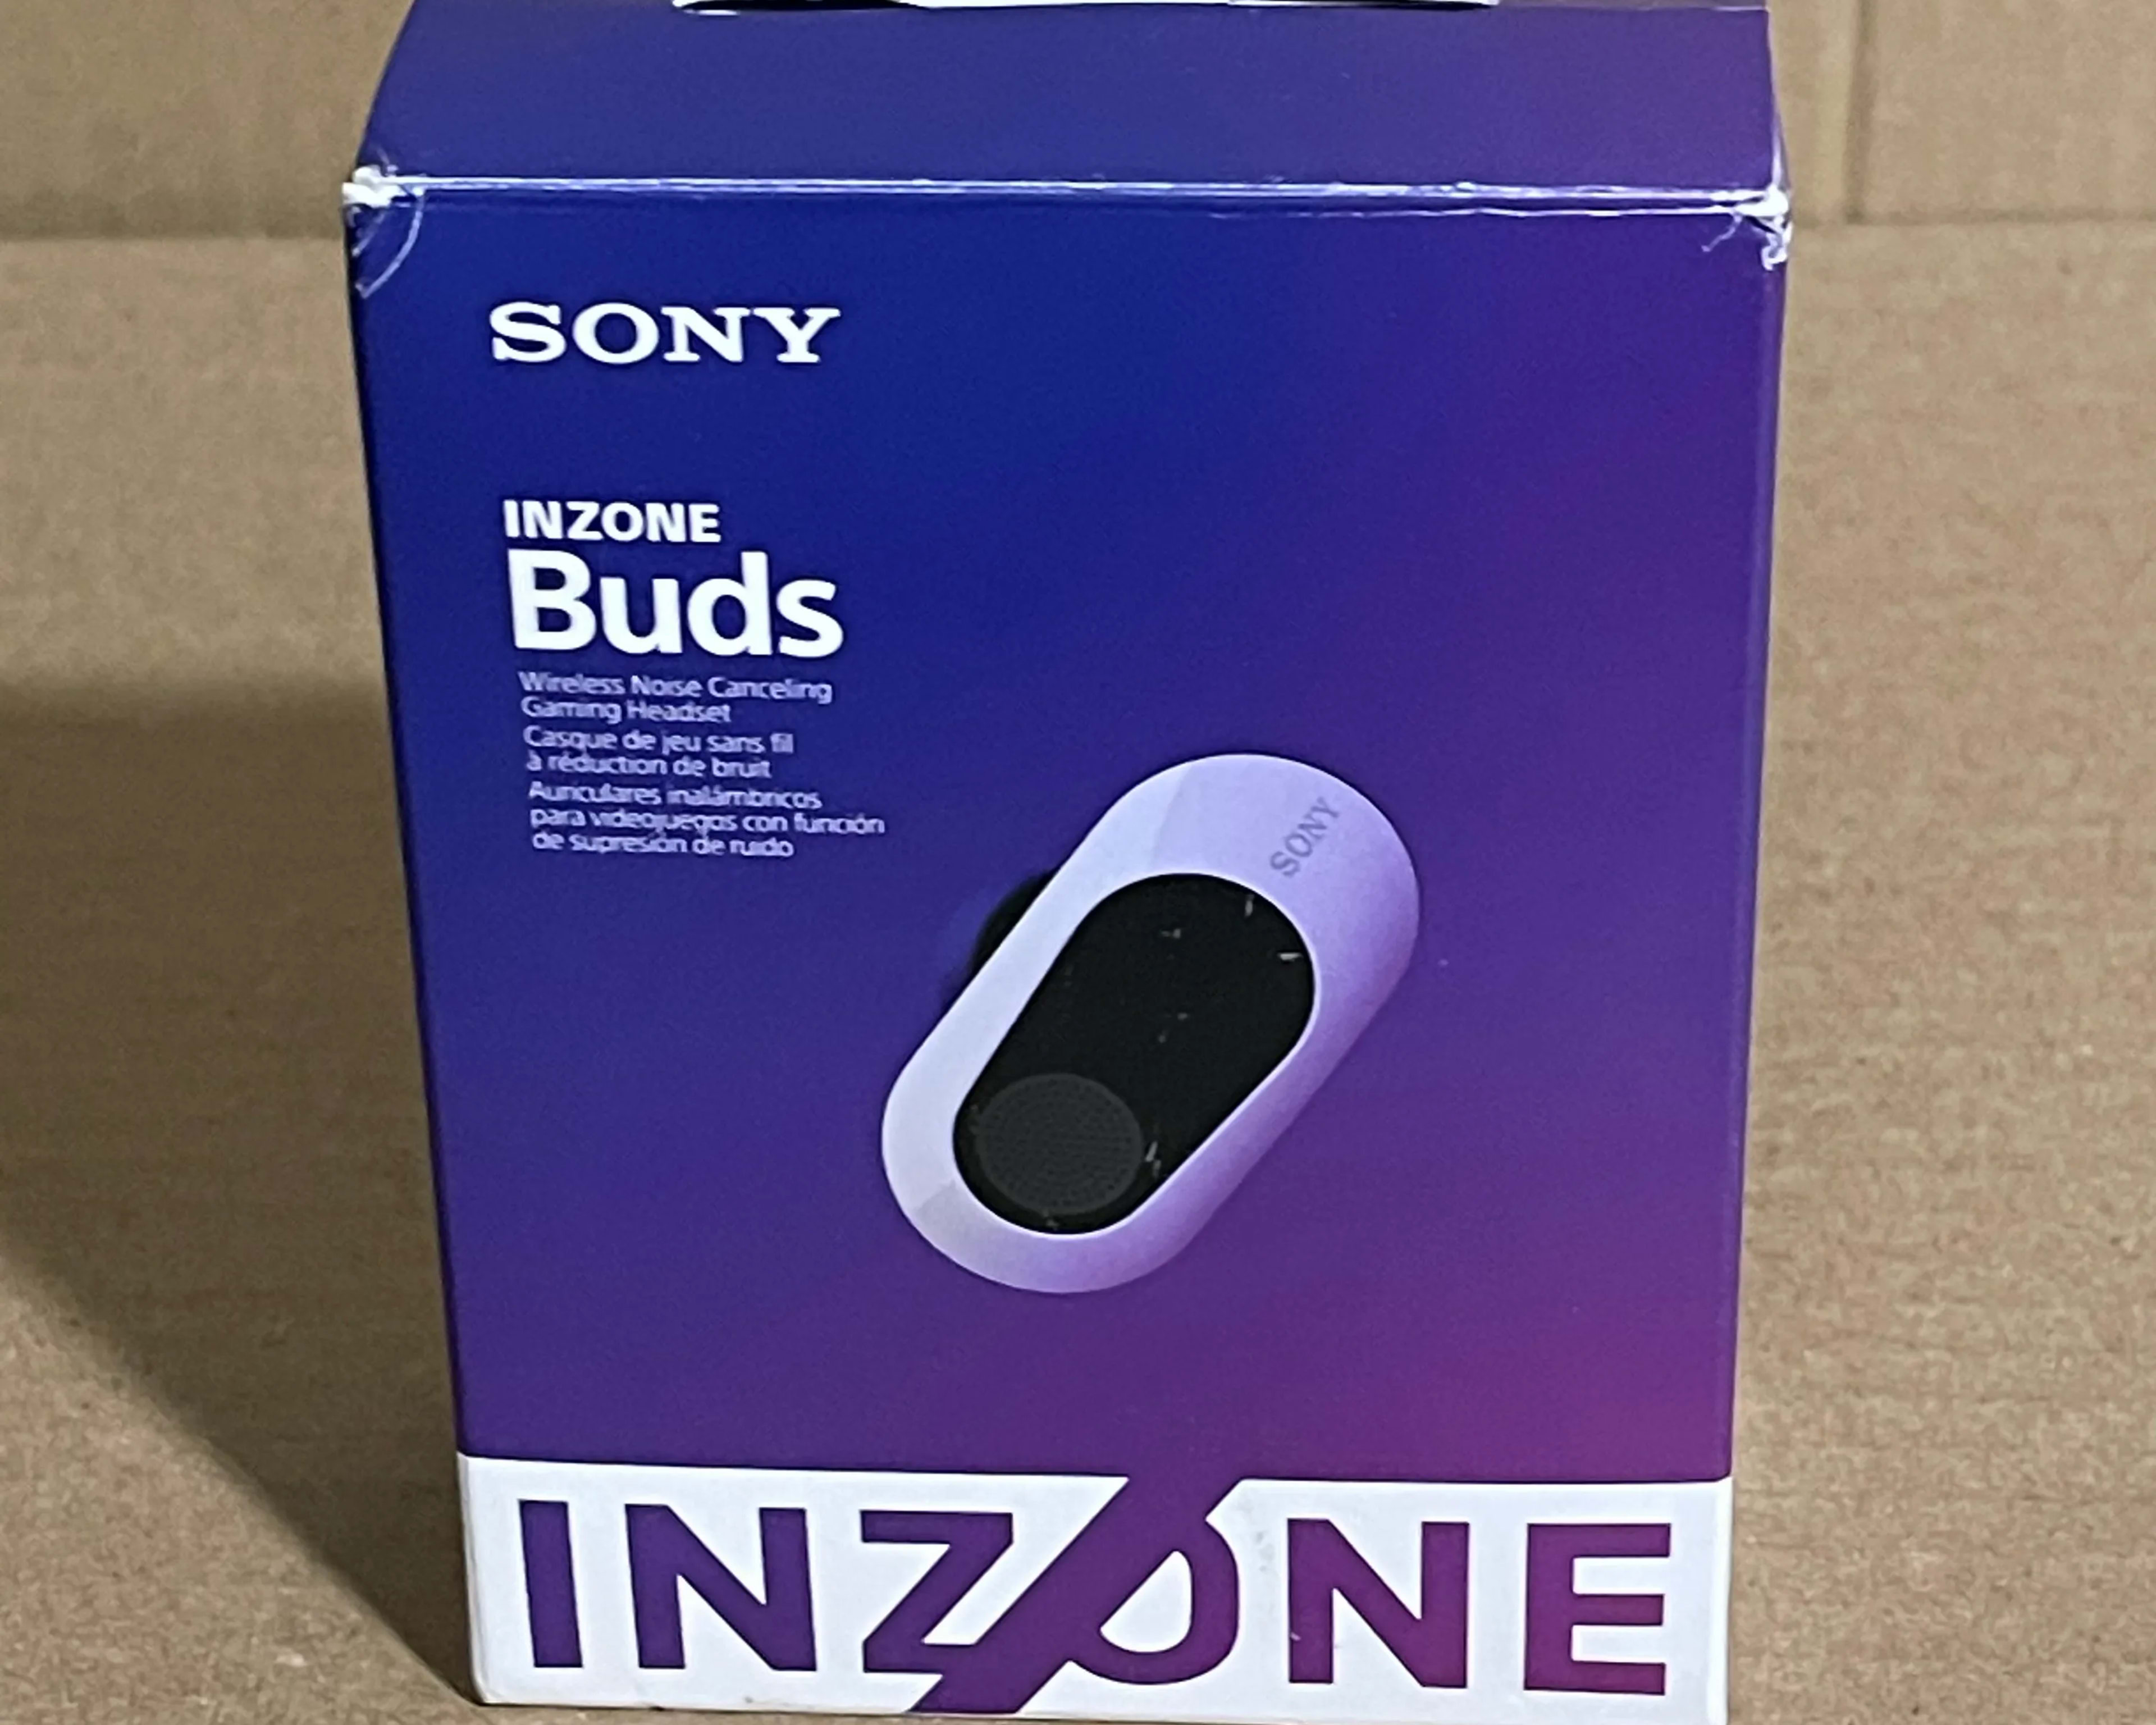 Sony INZONE Buds Noise Canceling Headset